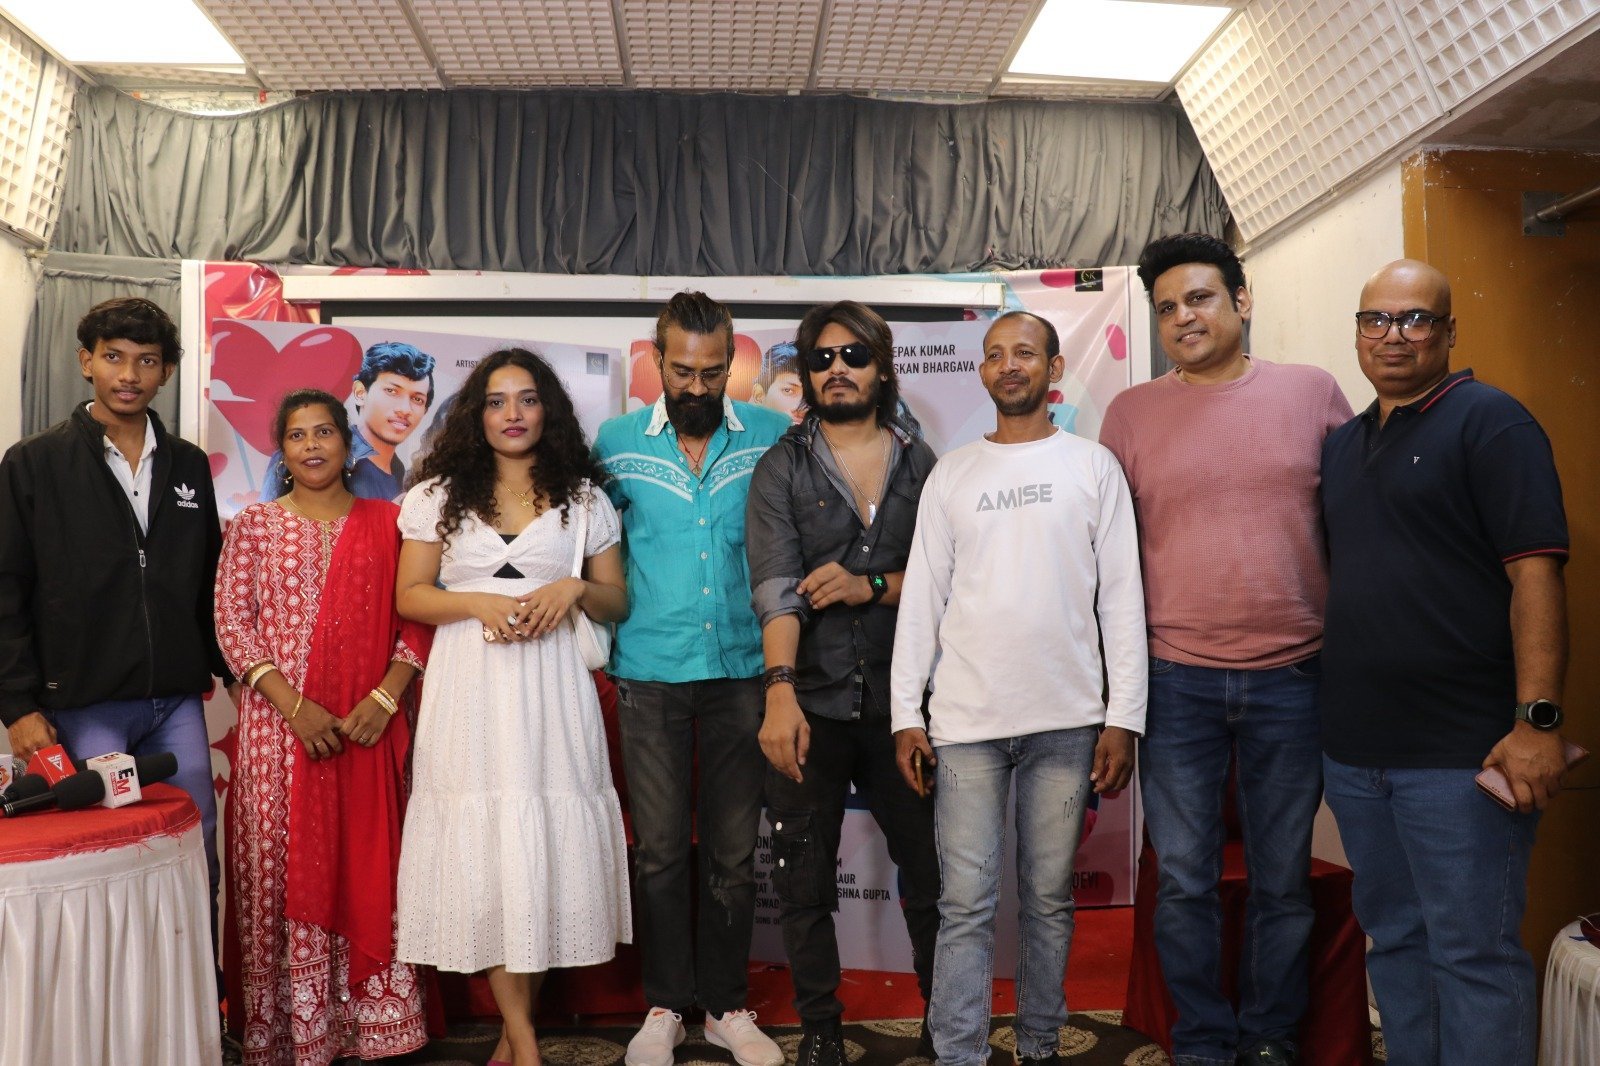 Music album 'Dil Bekraar' starring Deepak Kumar and Muskan Bhargava launched